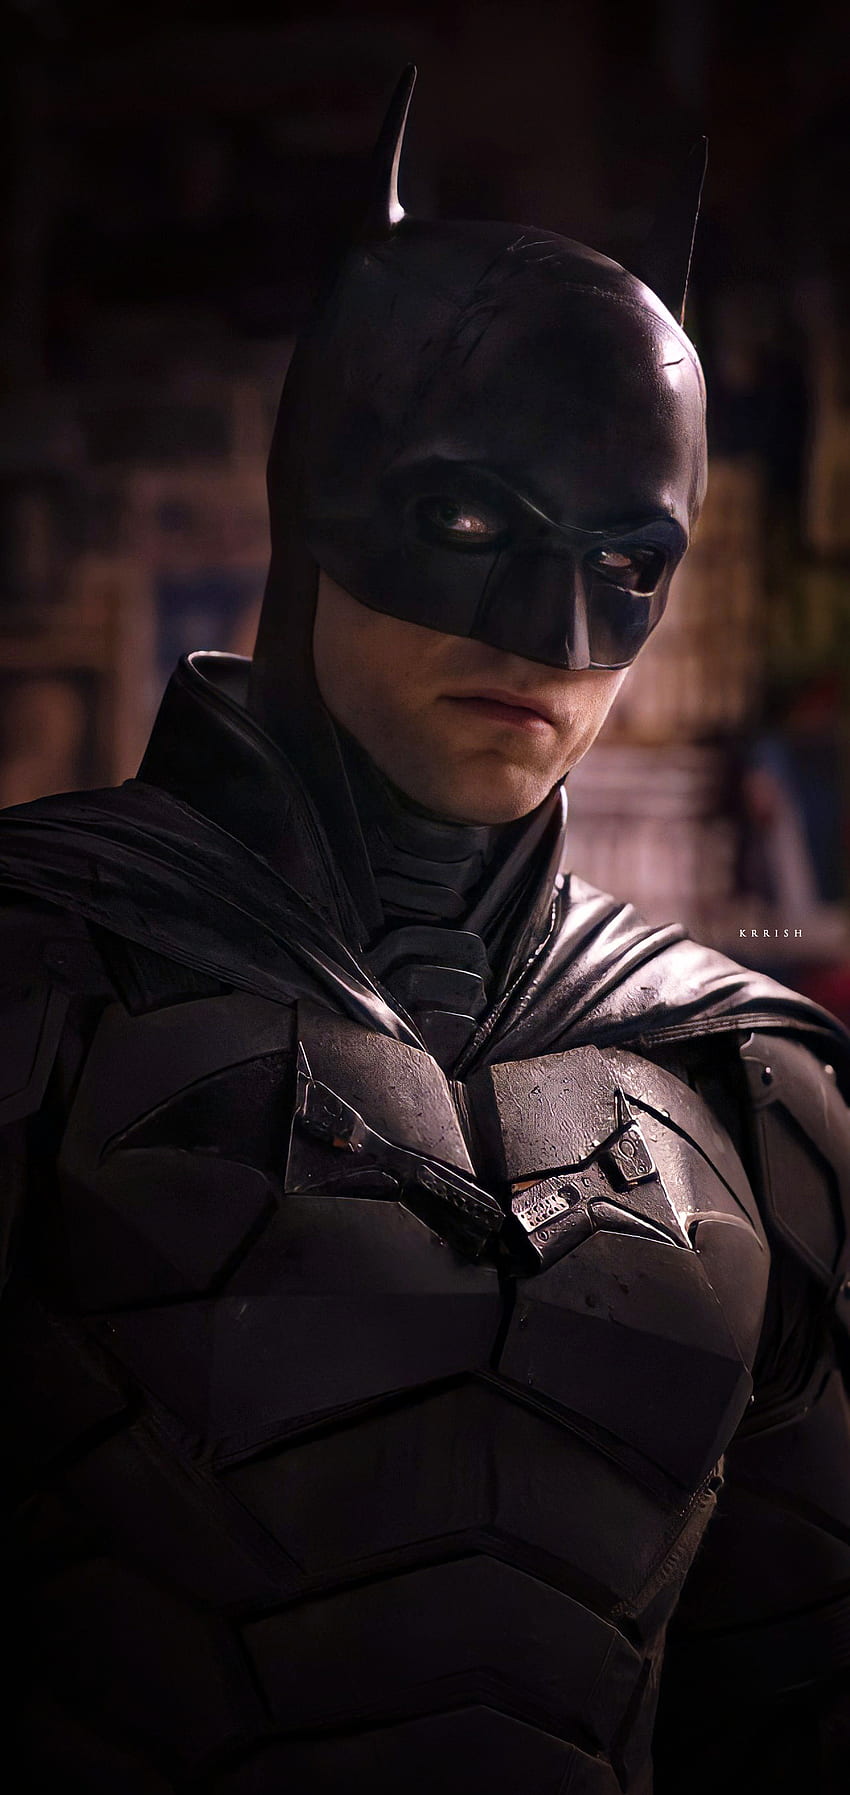 Download Bruce Wayne - The Mastermind Behind Batman Wallpaper | Wallpapers .com